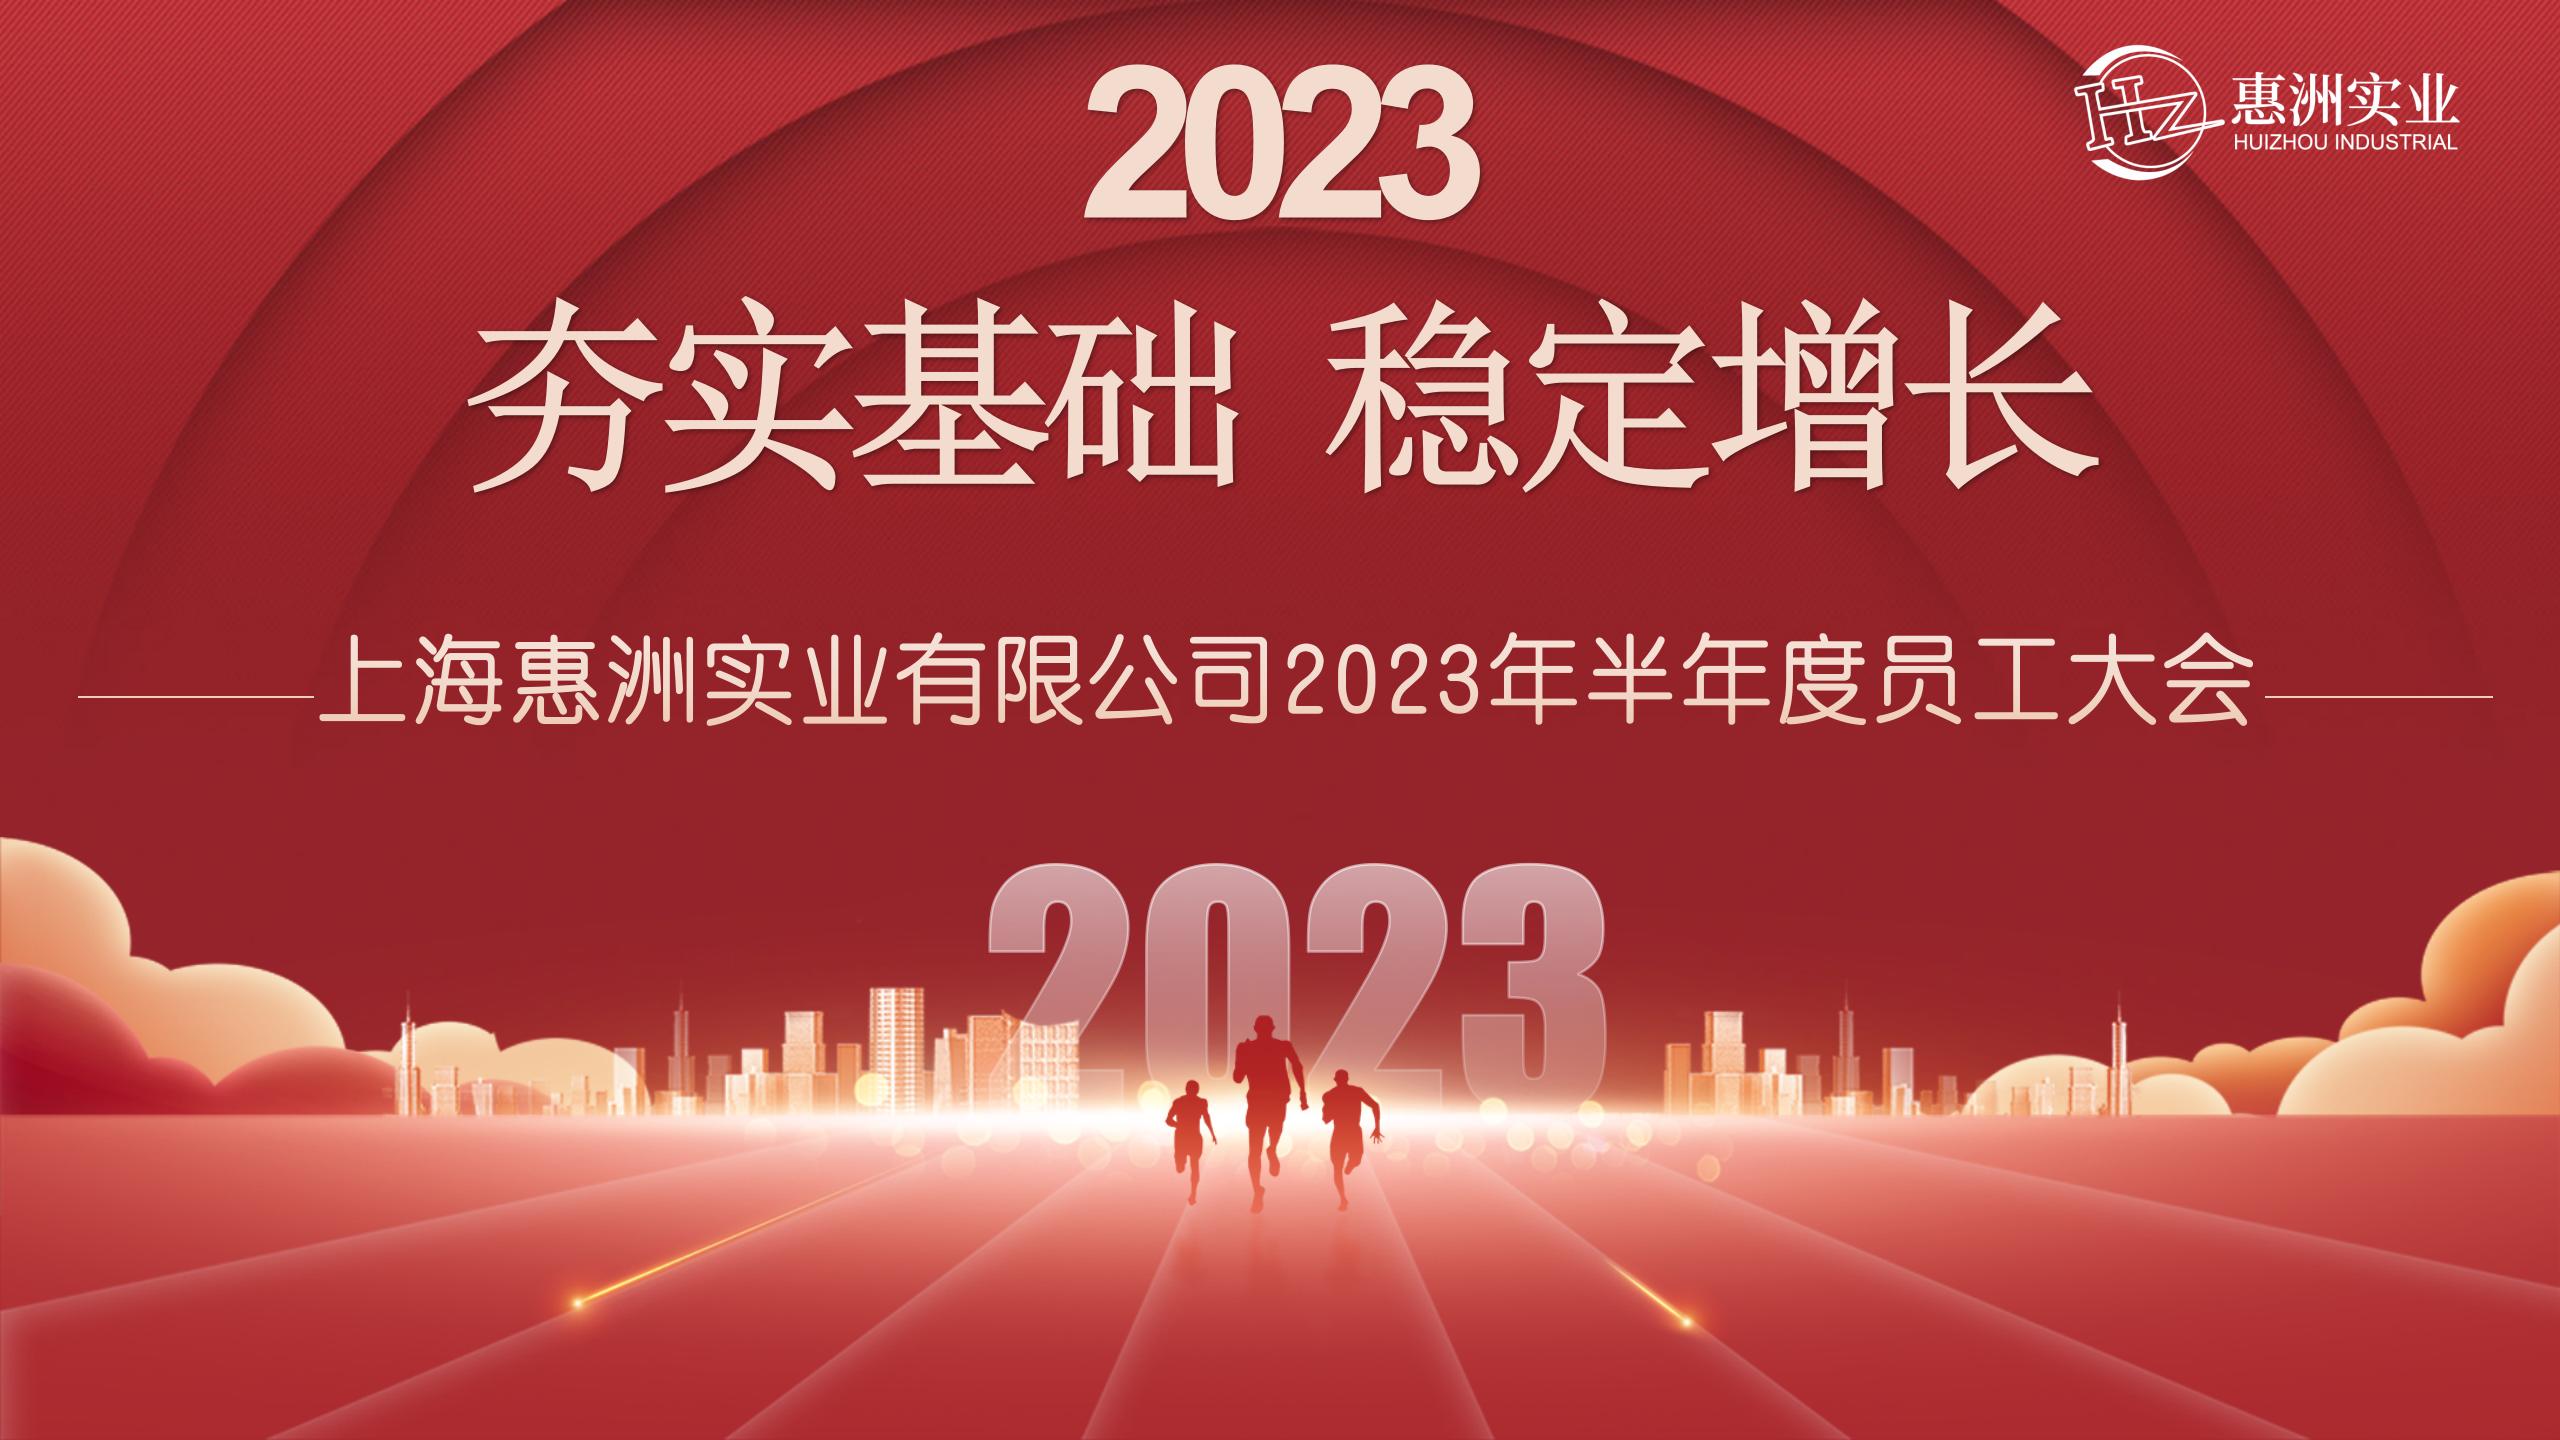 Huizhou Duonjara Stabkunveno 2023 |